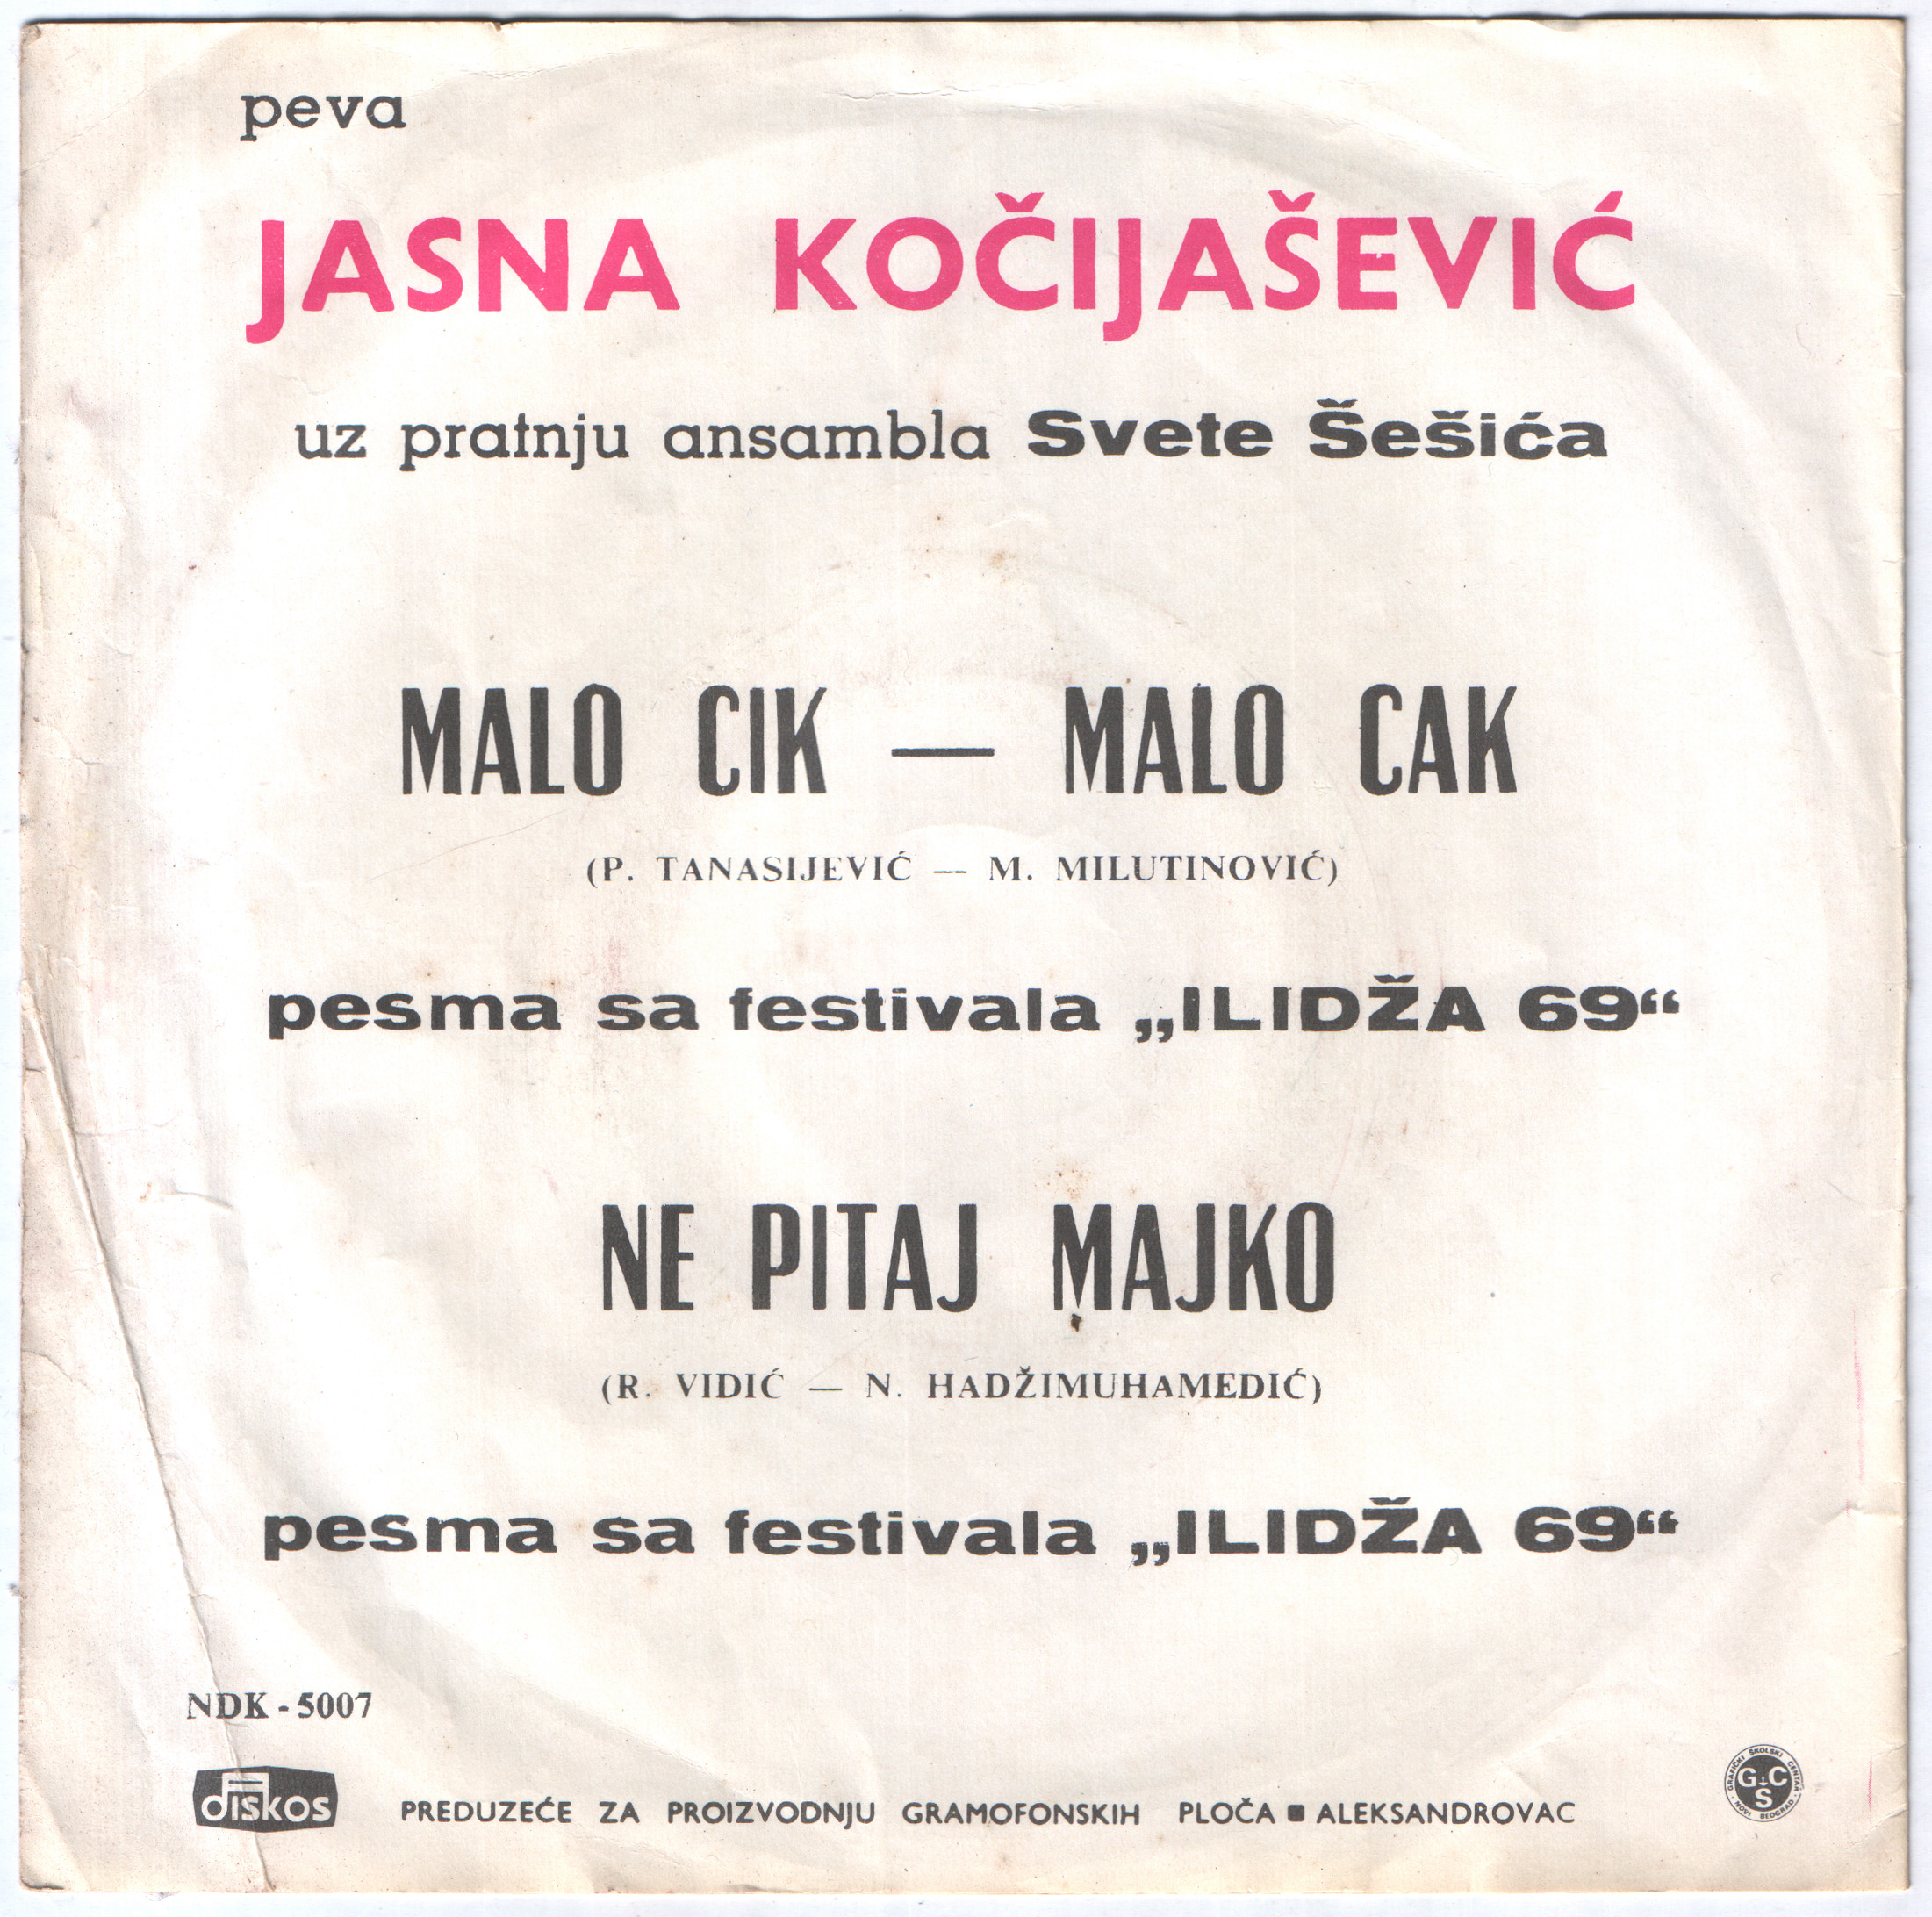 Jasna Kocijasevic 1969 Z